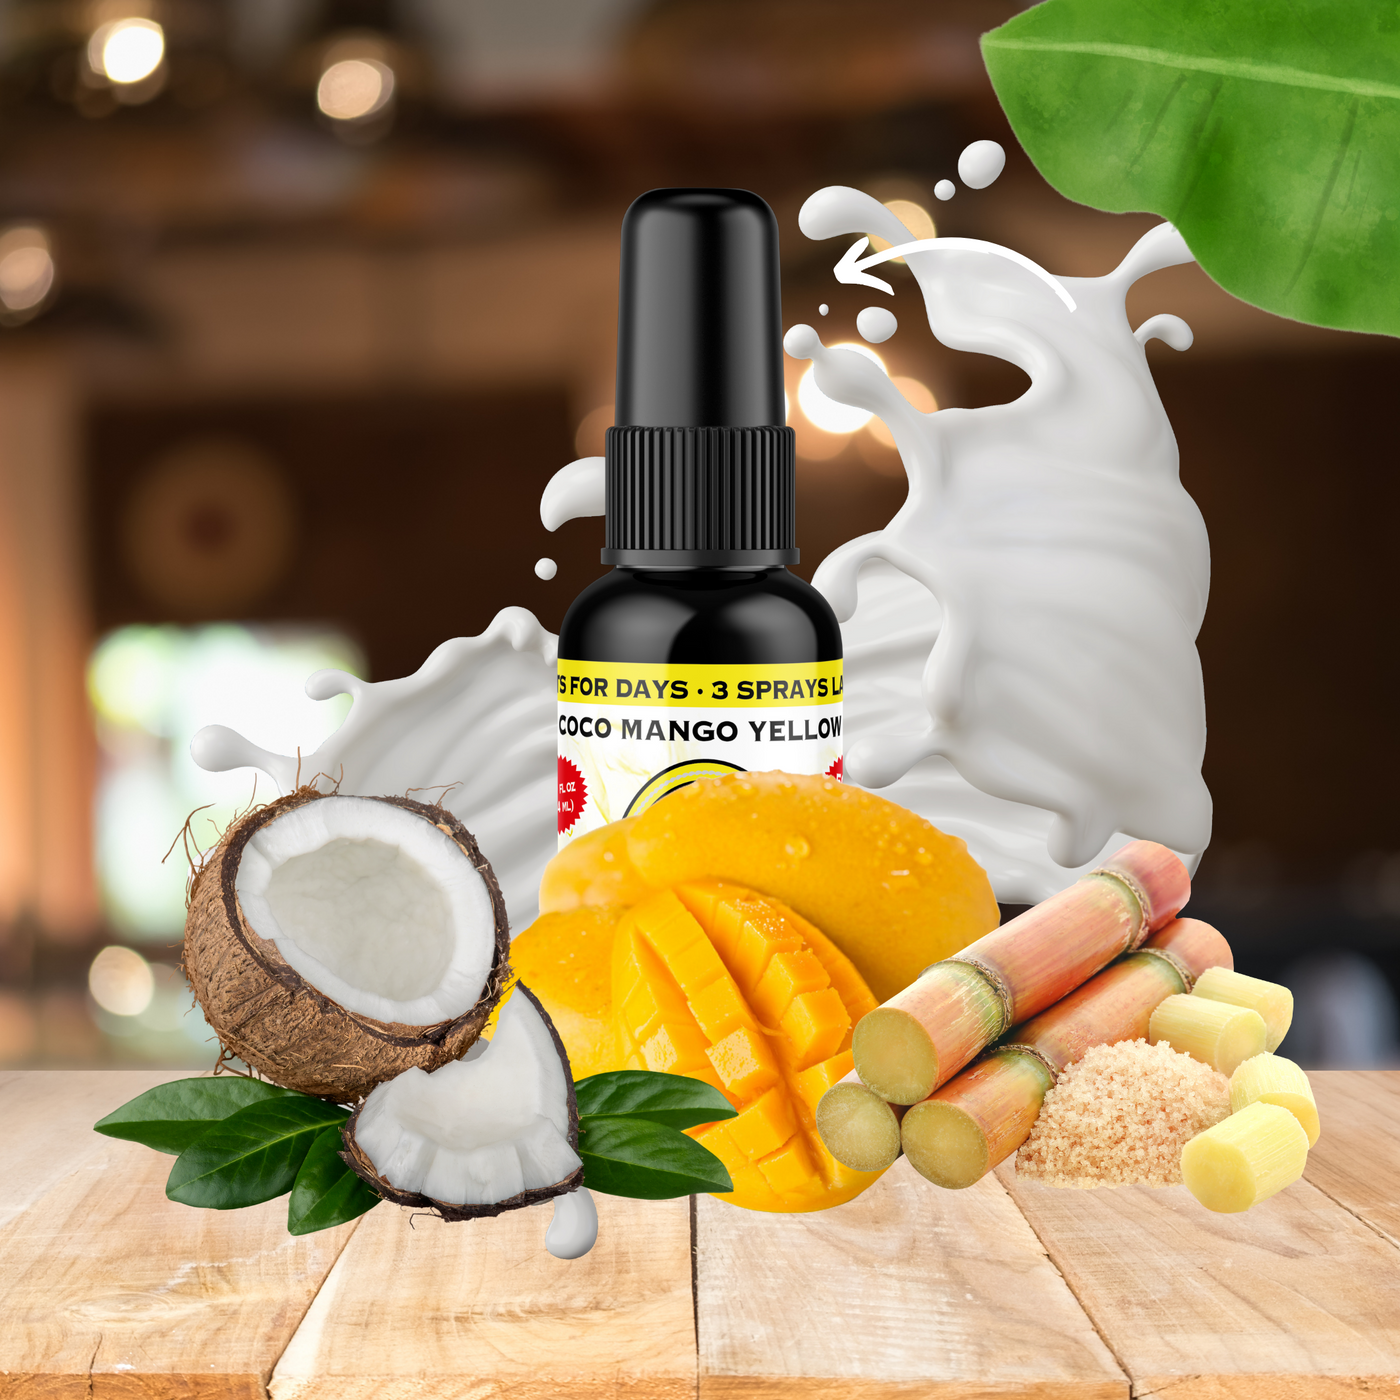 Coco Mango Yellow Air Freshener Spray